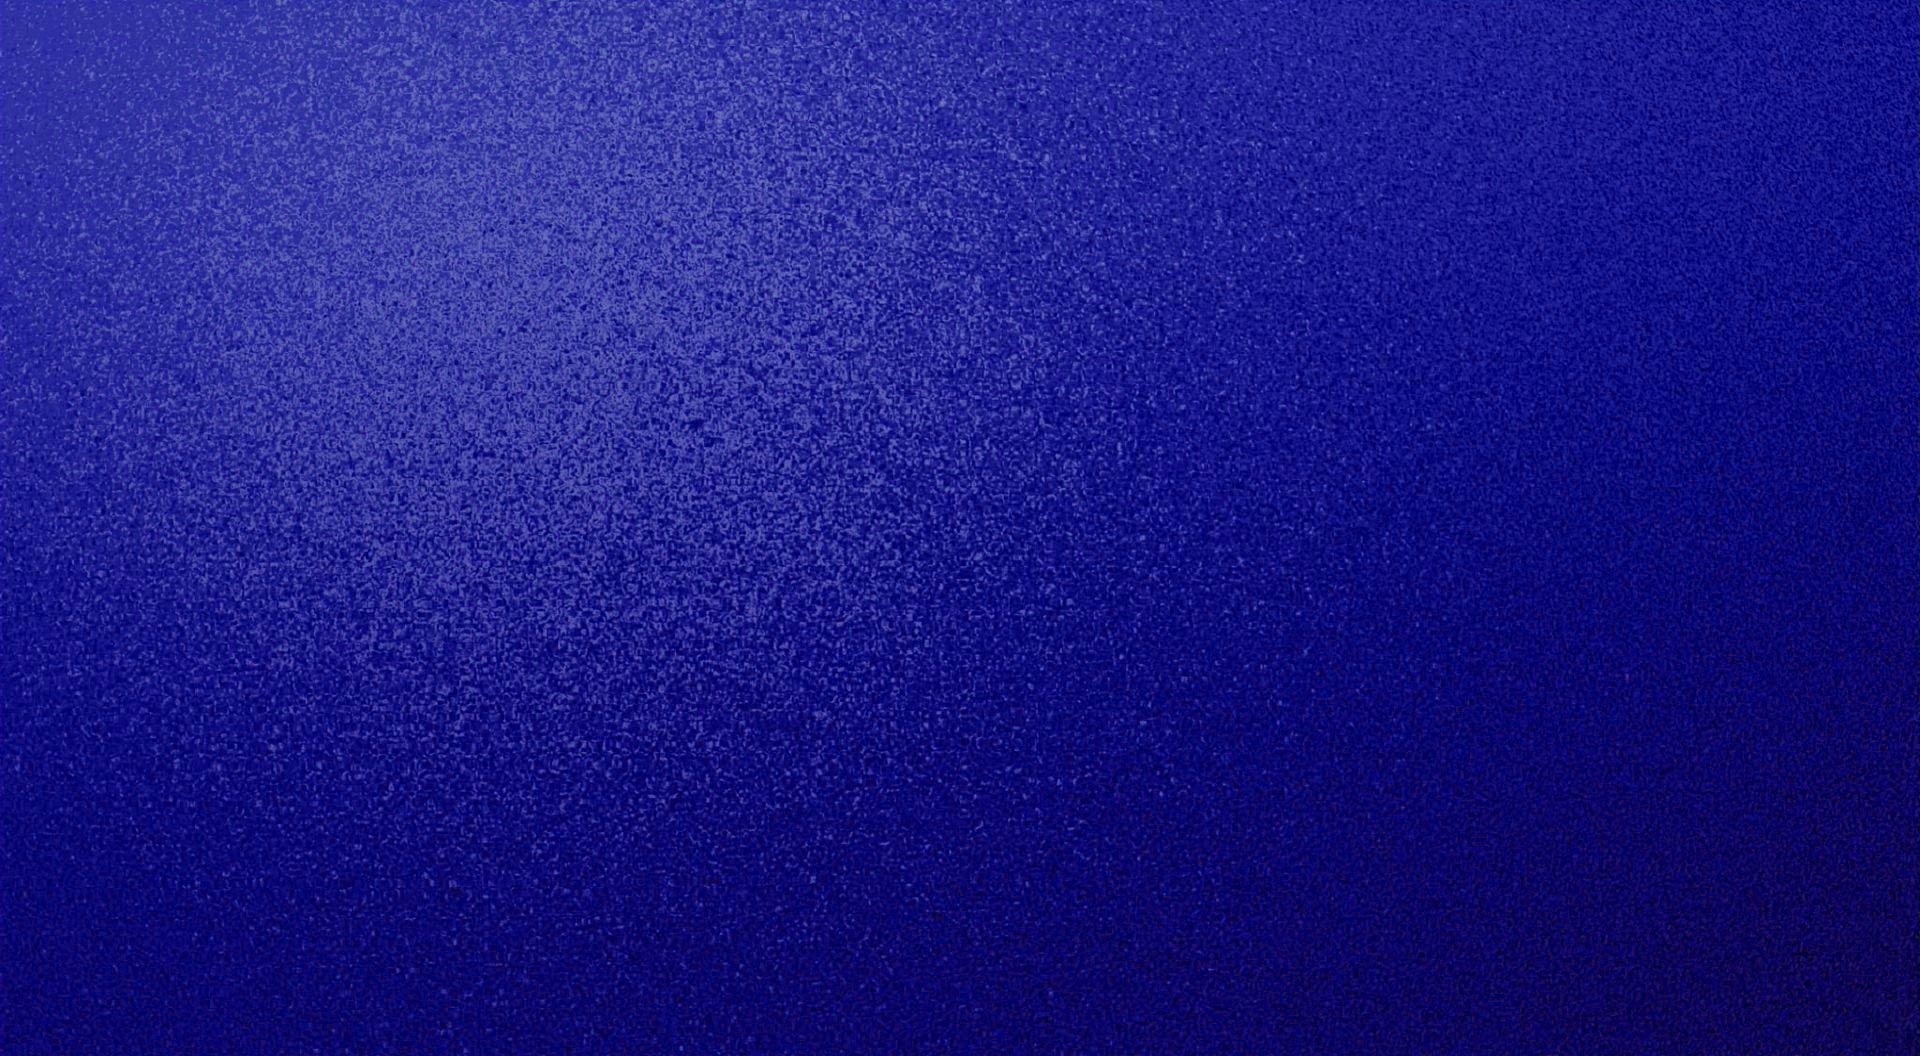 Dark blueroyal blue textured speckled desktop background wallpaper 1920x1056